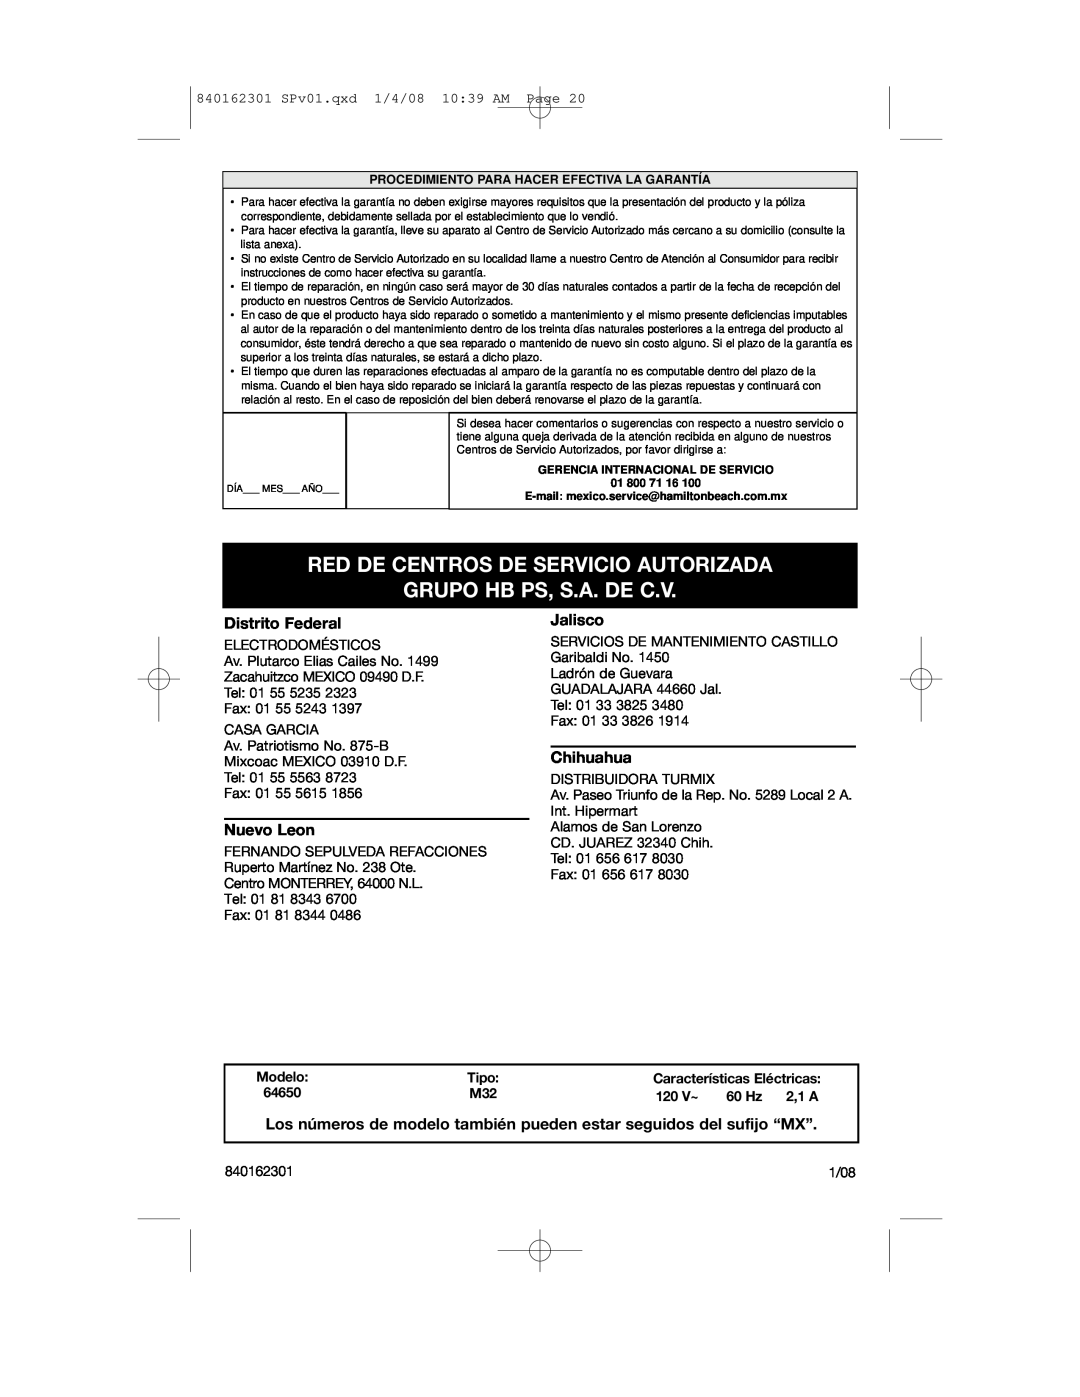 Hamilton Beach Hand/Stand Mixer manual Red De Centros De Servicio Autorizada, Grupo Hb Ps, S.A. De C.V, 64650, 120 V~ 